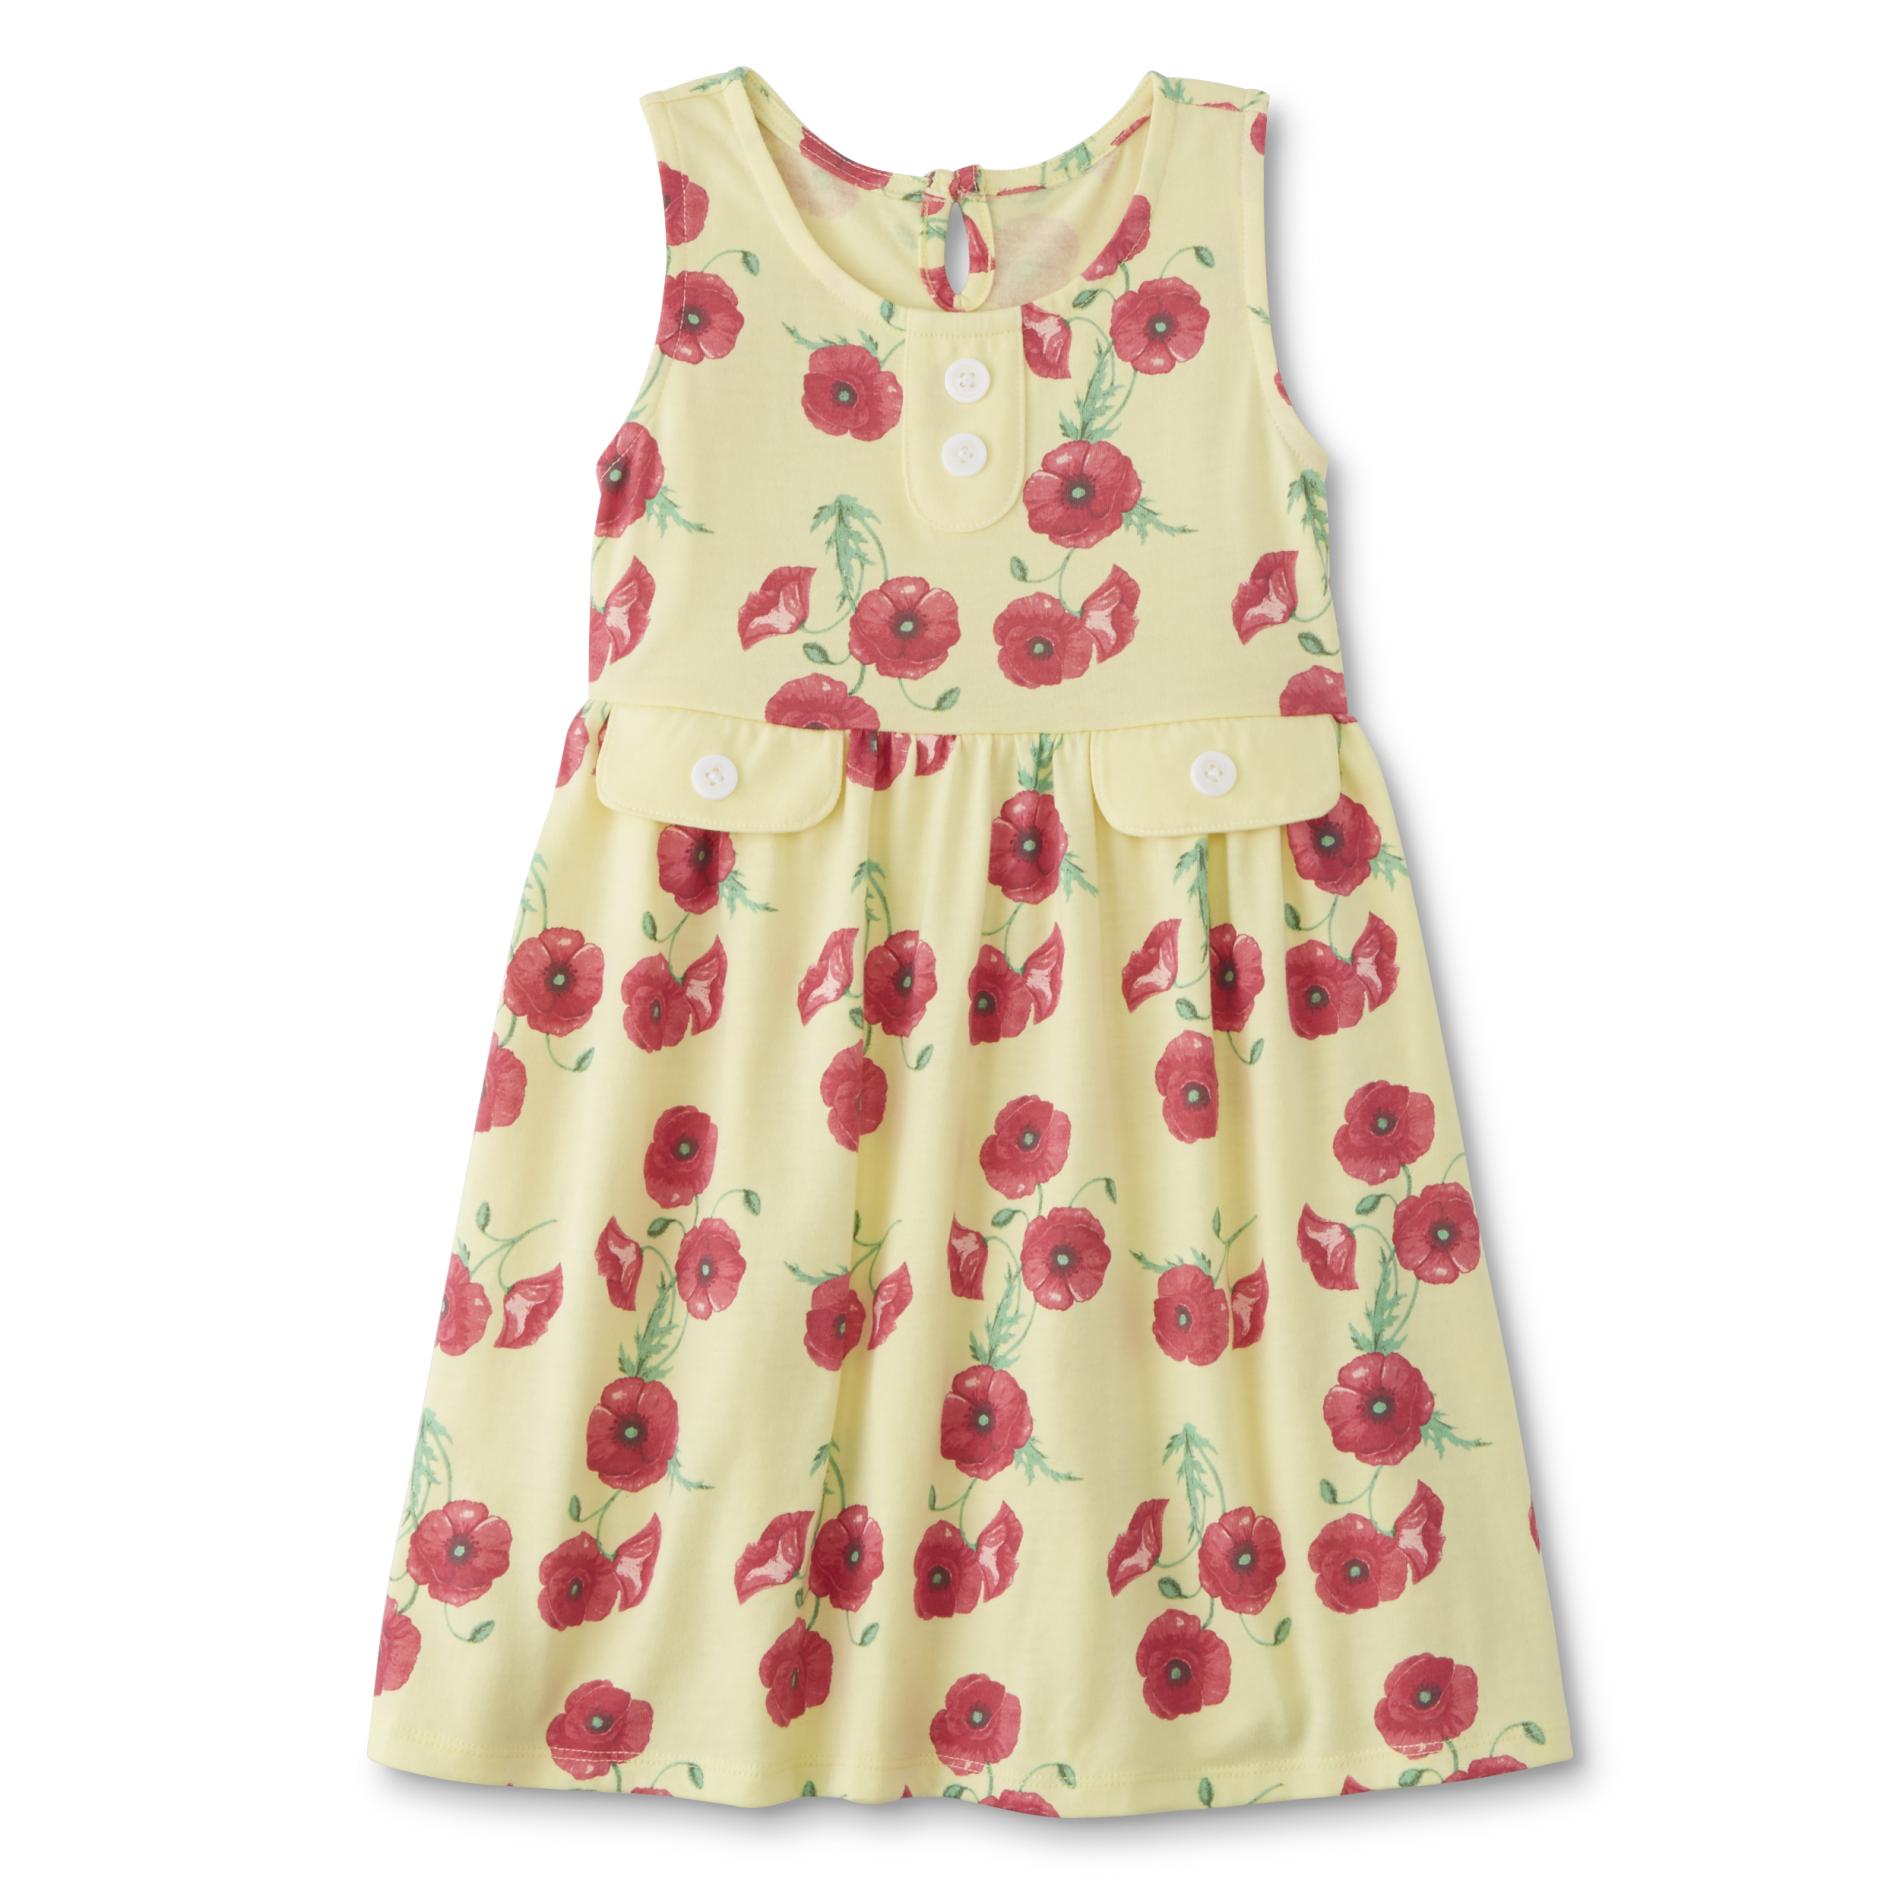 Toughskins Toddler & Infant  Girls' Sleeveless Dress - Floral